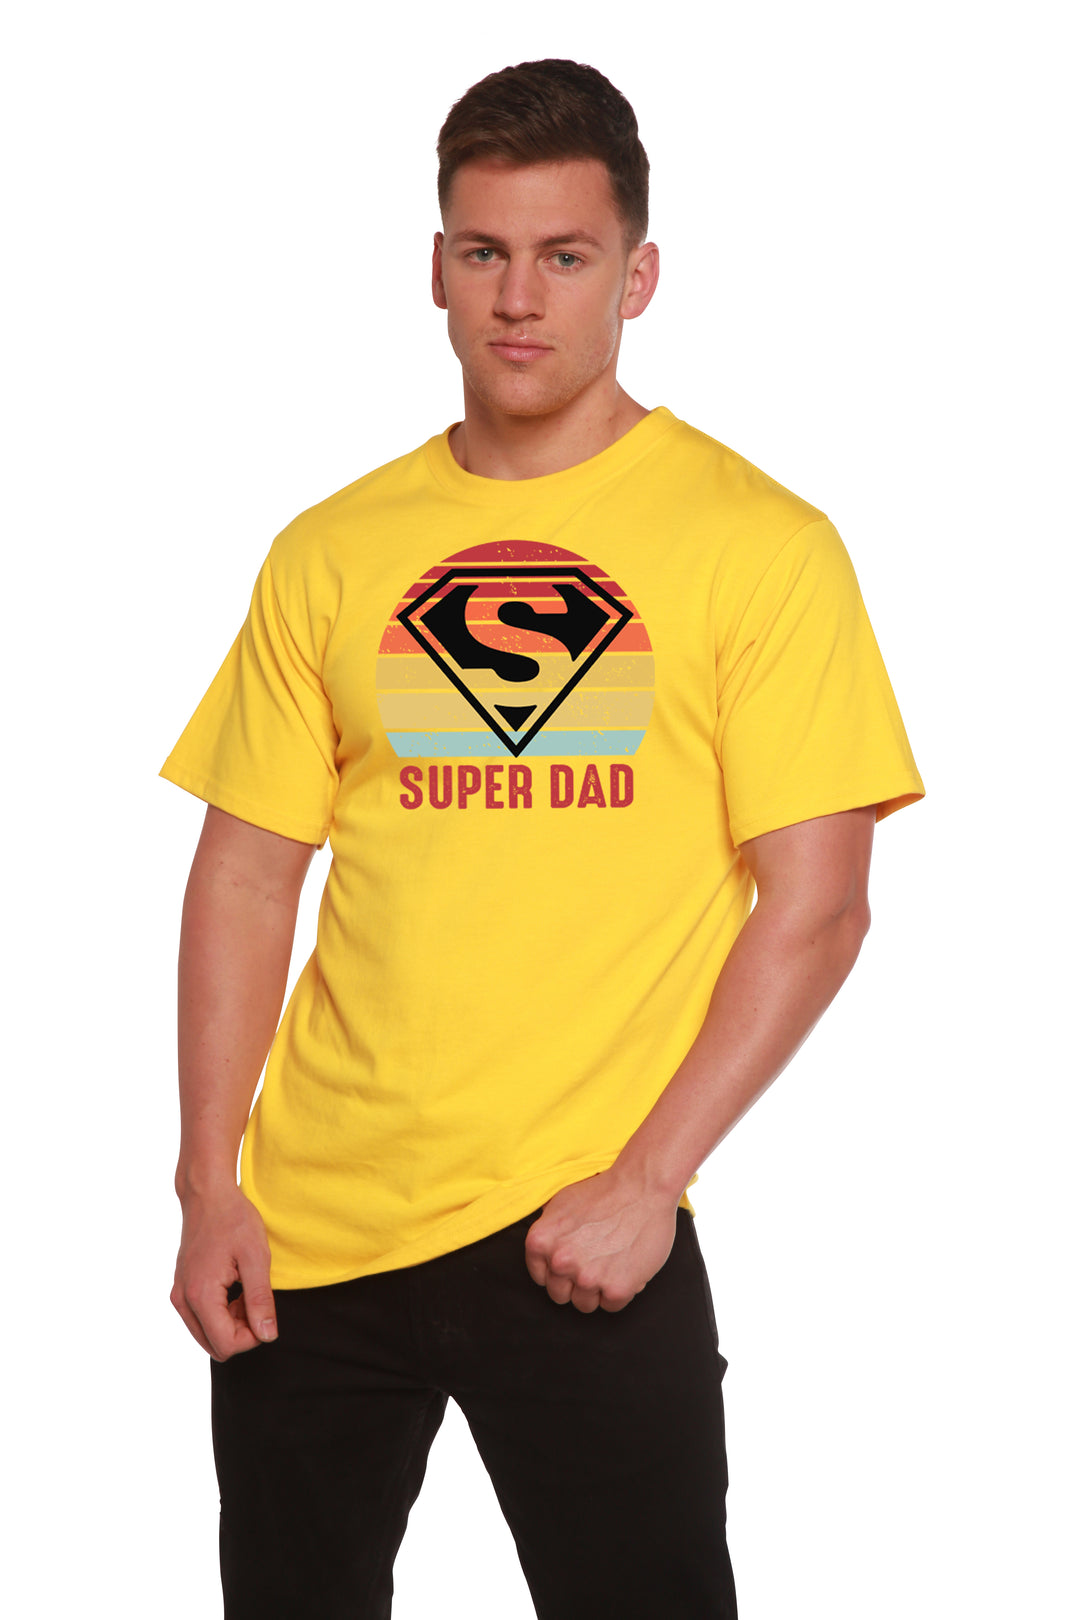 Super Dad Men's Bamboo Viscose/Organic Cotton Short Sleeve T-Shirt - Spun Bamboo